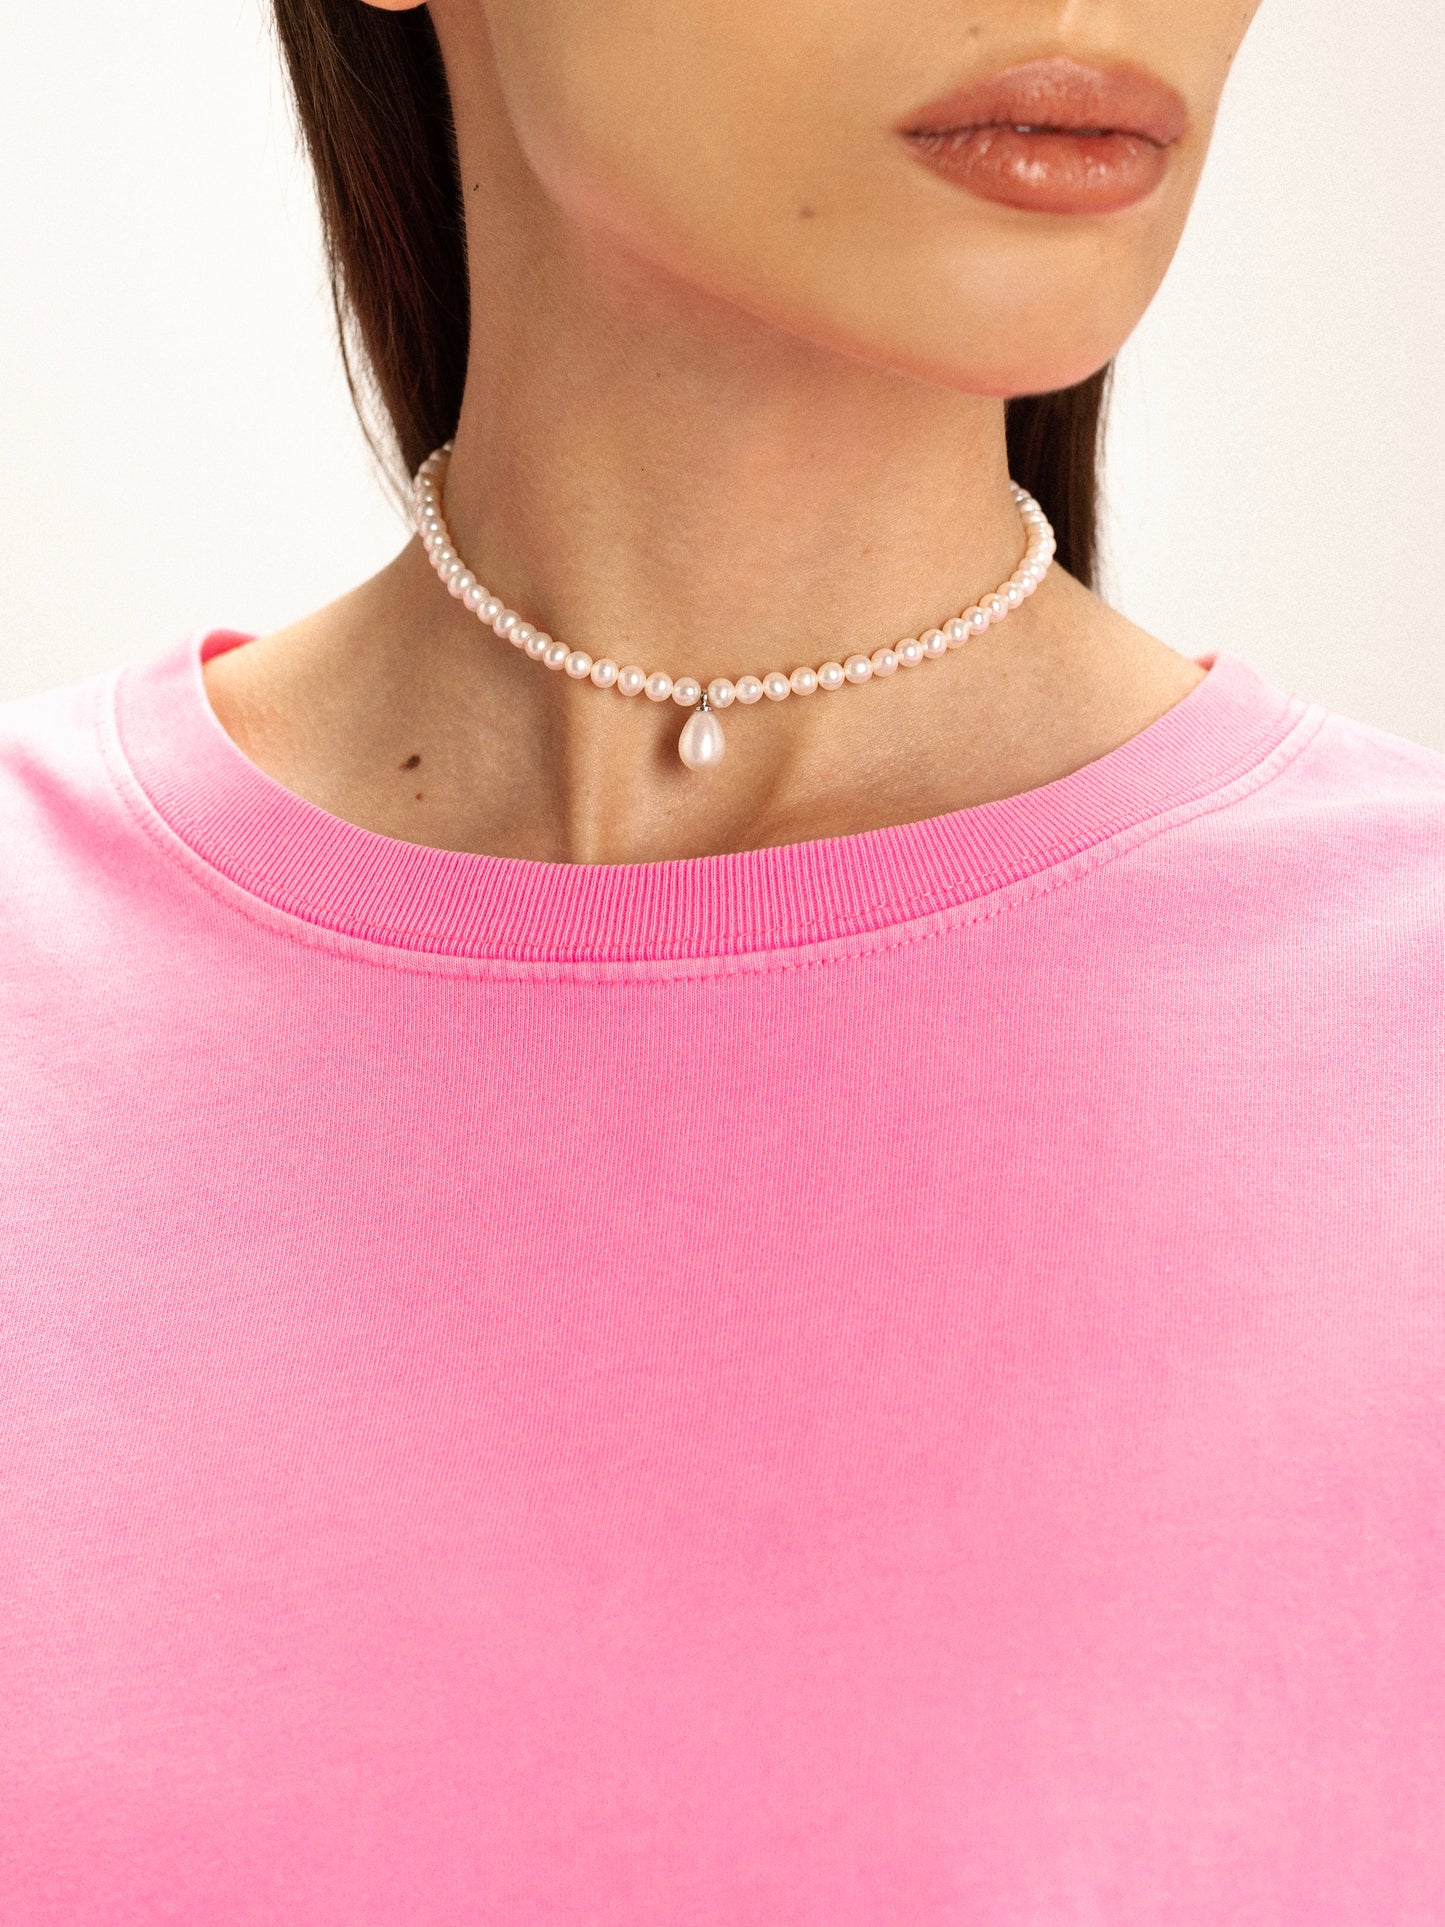 Lulu pearl choker necklace